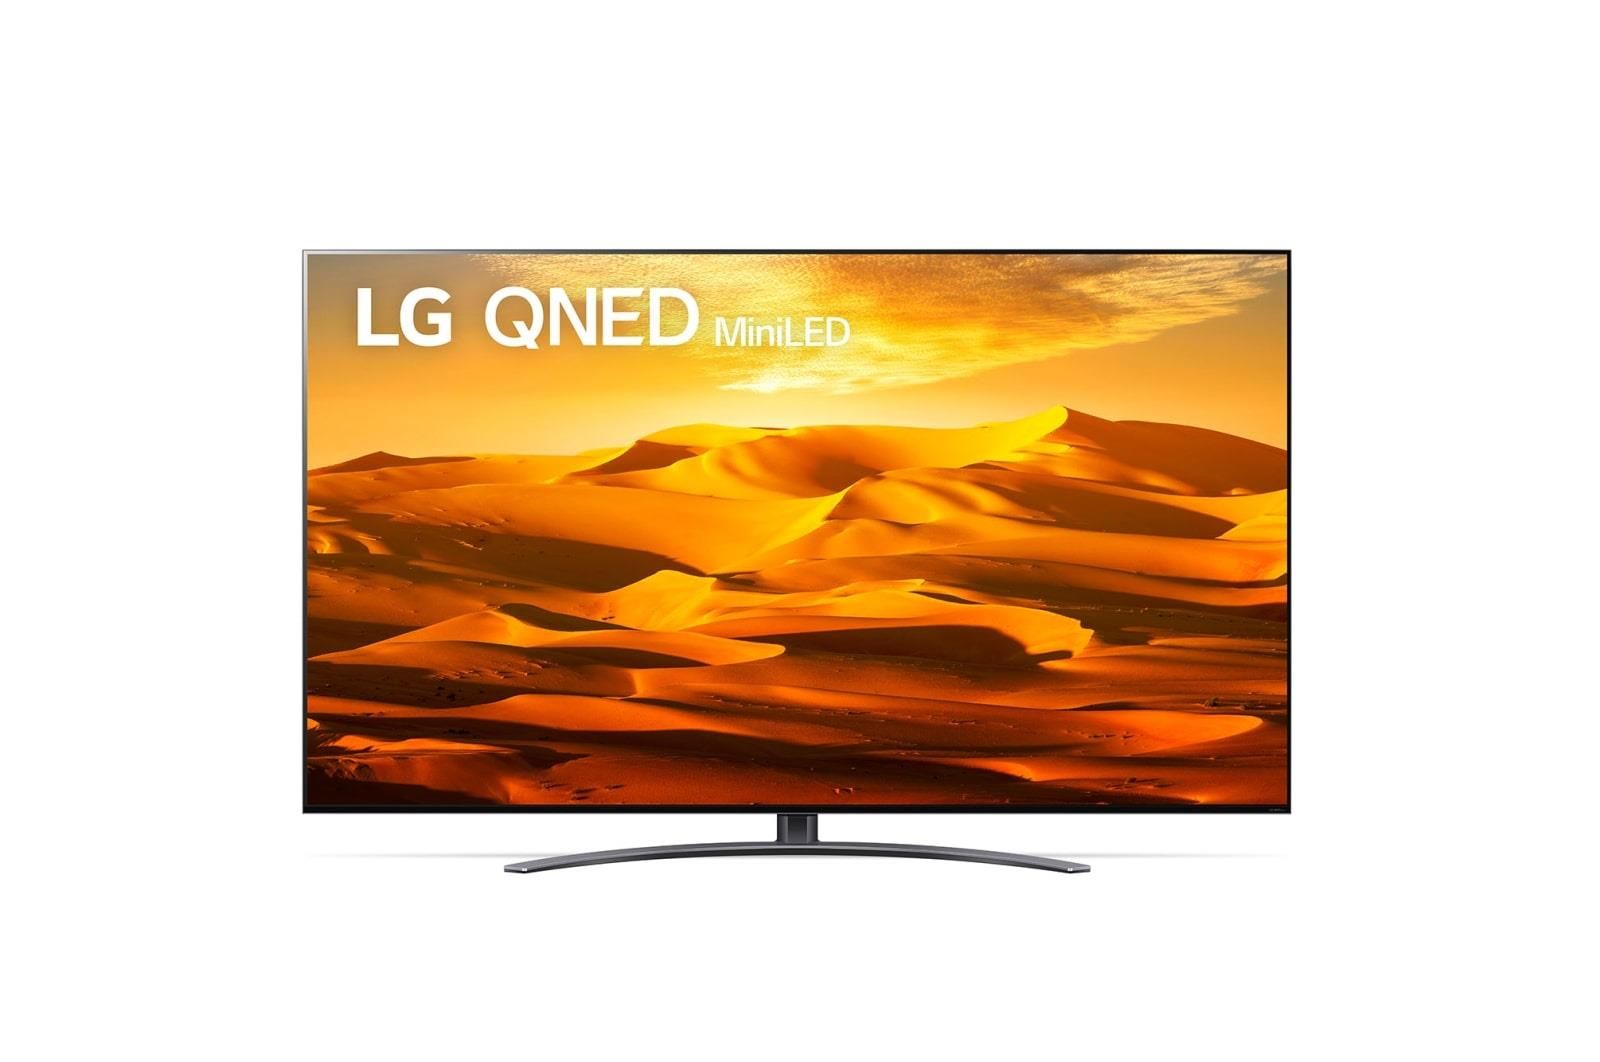 LG QNED MiniLed Tv